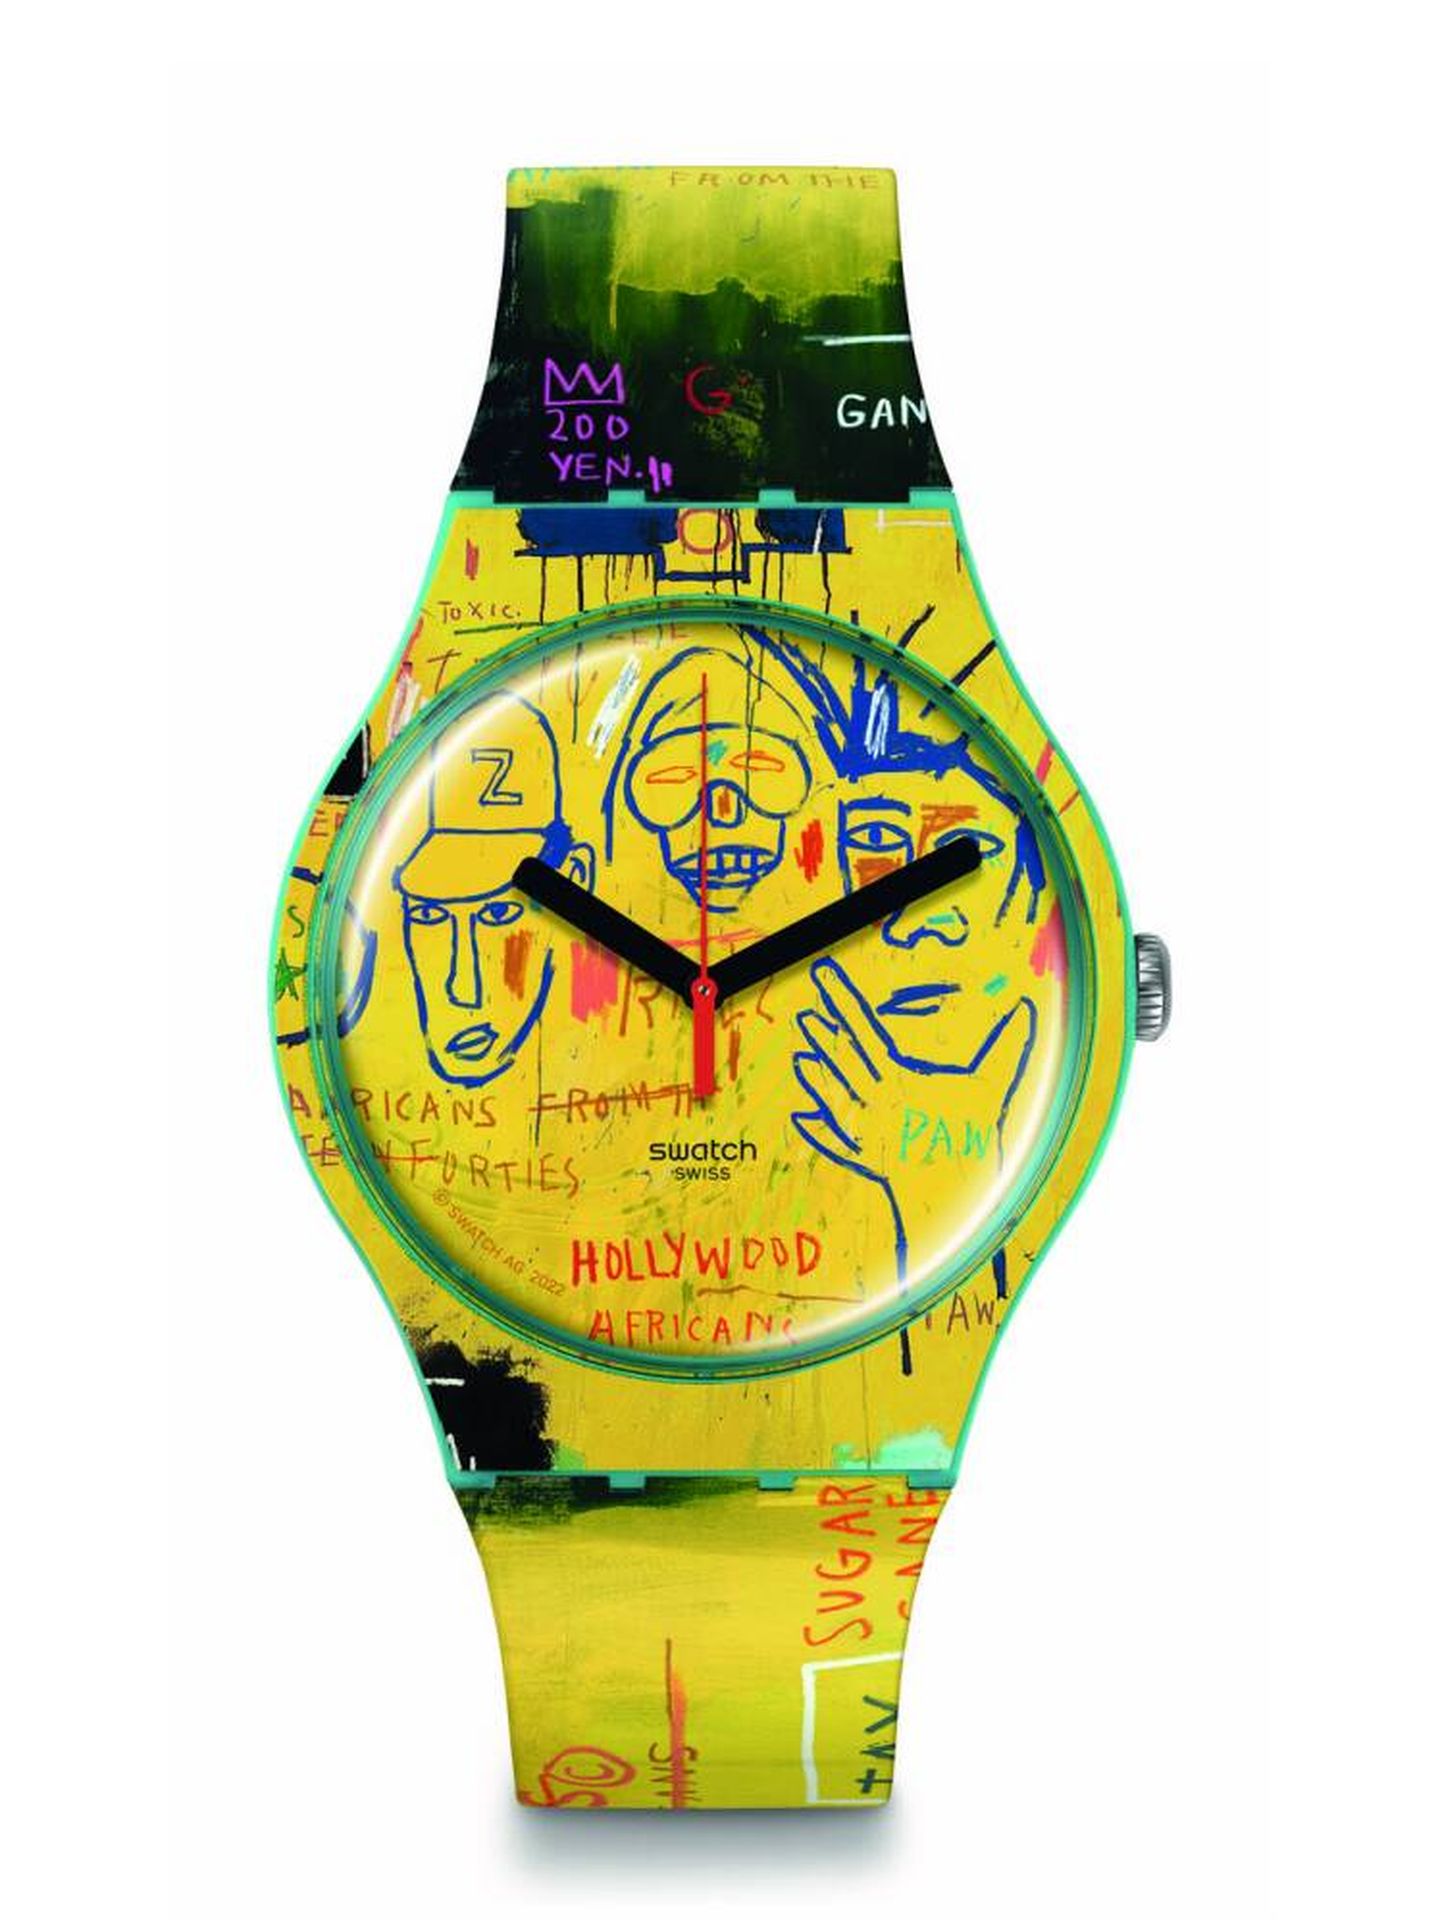 Swatch Hollywood Africans by Jean-Michel Basquiat. (Cortesía)